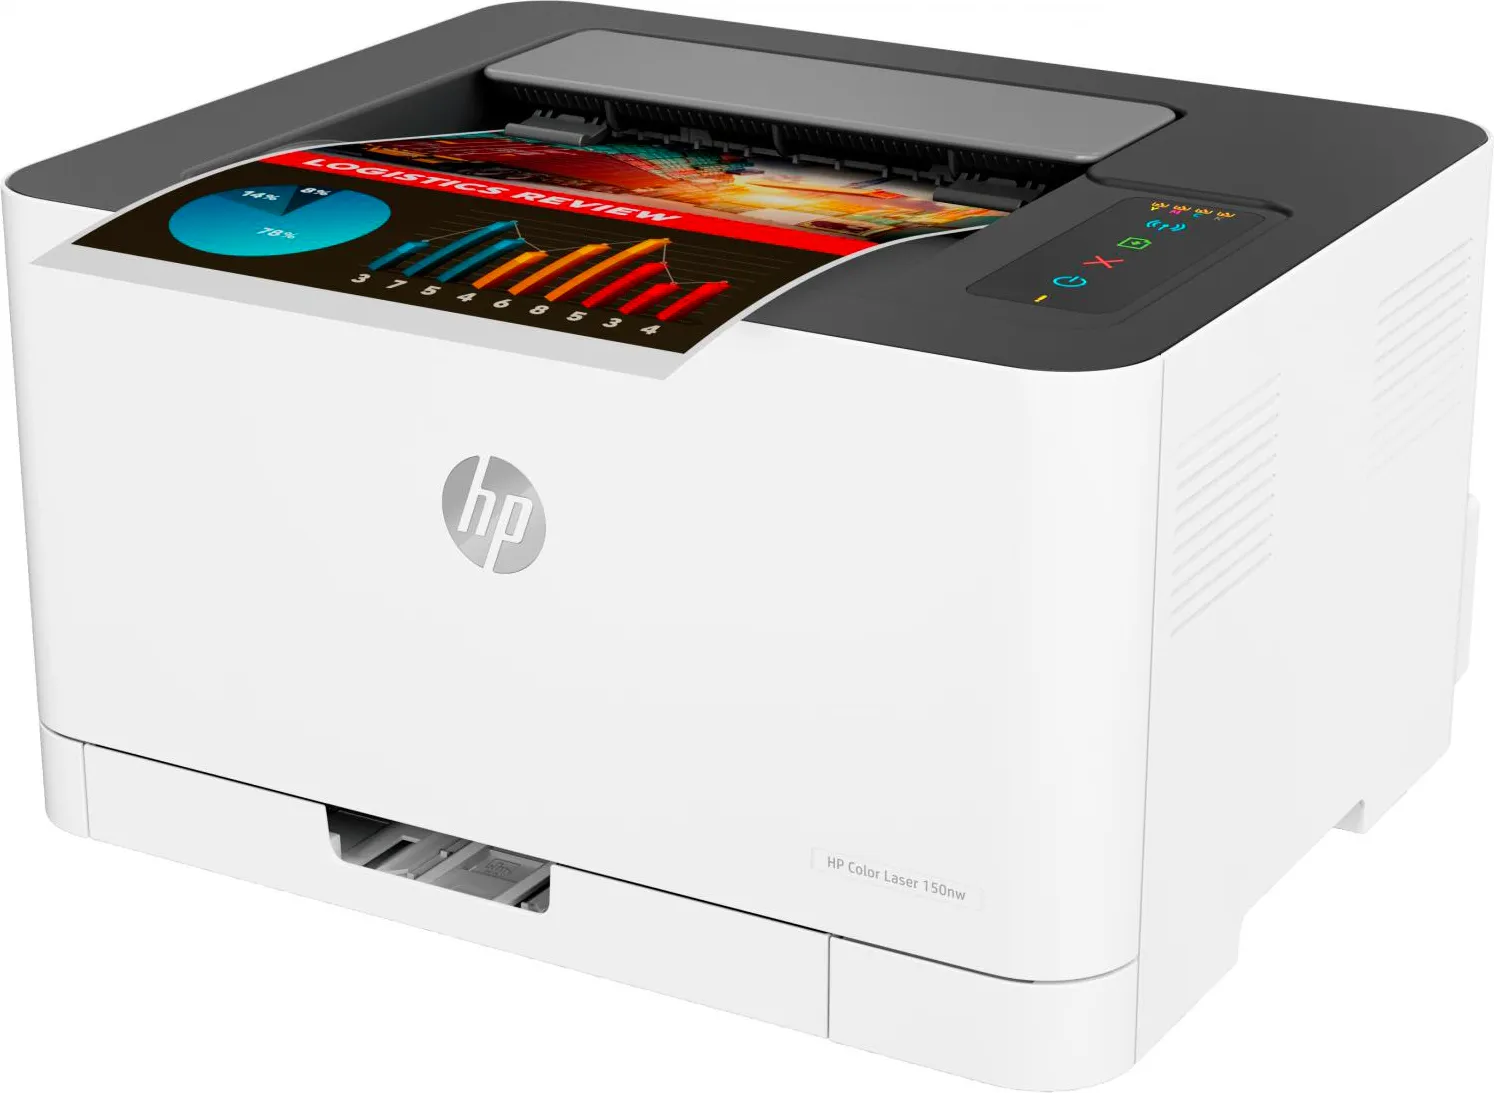 Stampante Laser Colori HP 4ZB95A Color Laser 150NW in Offerta su